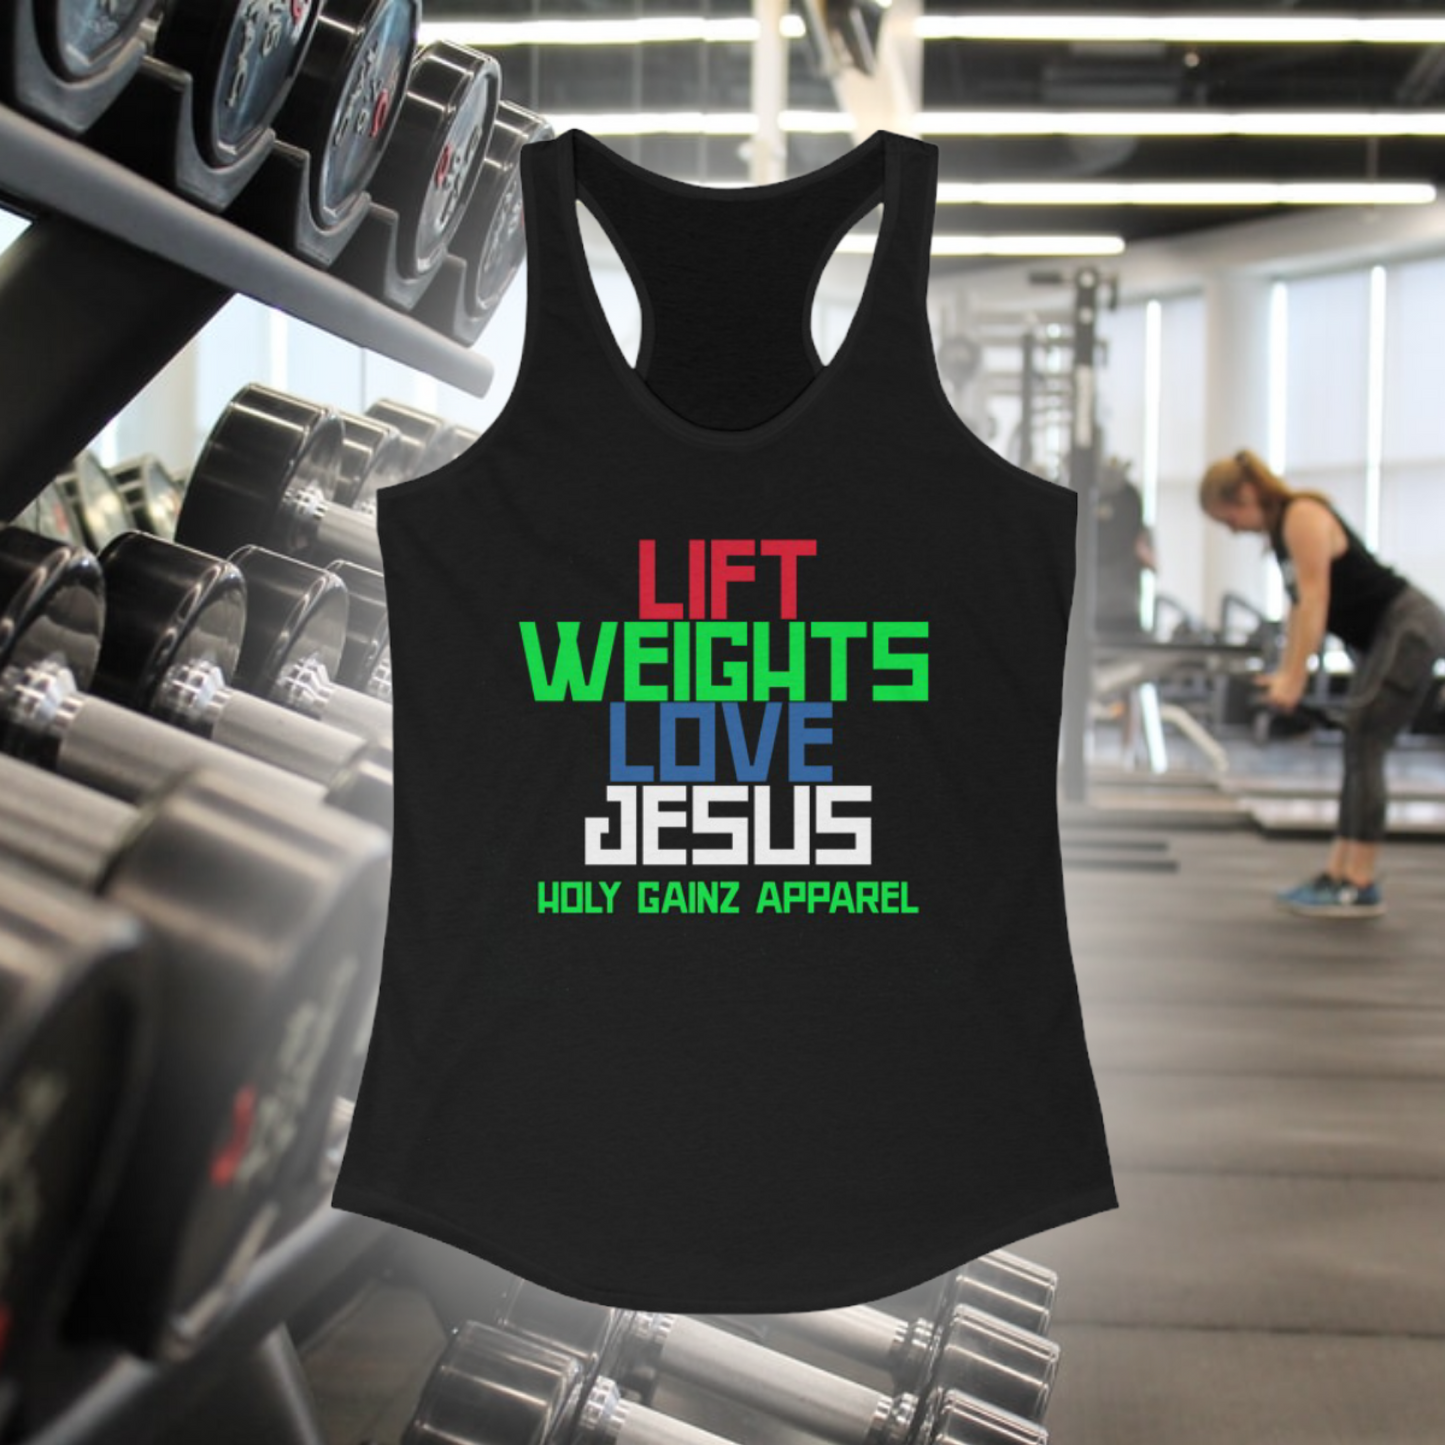 Holy Gainz Apparel “Lift Weights, Love Jesus” Women's Racerback Tank